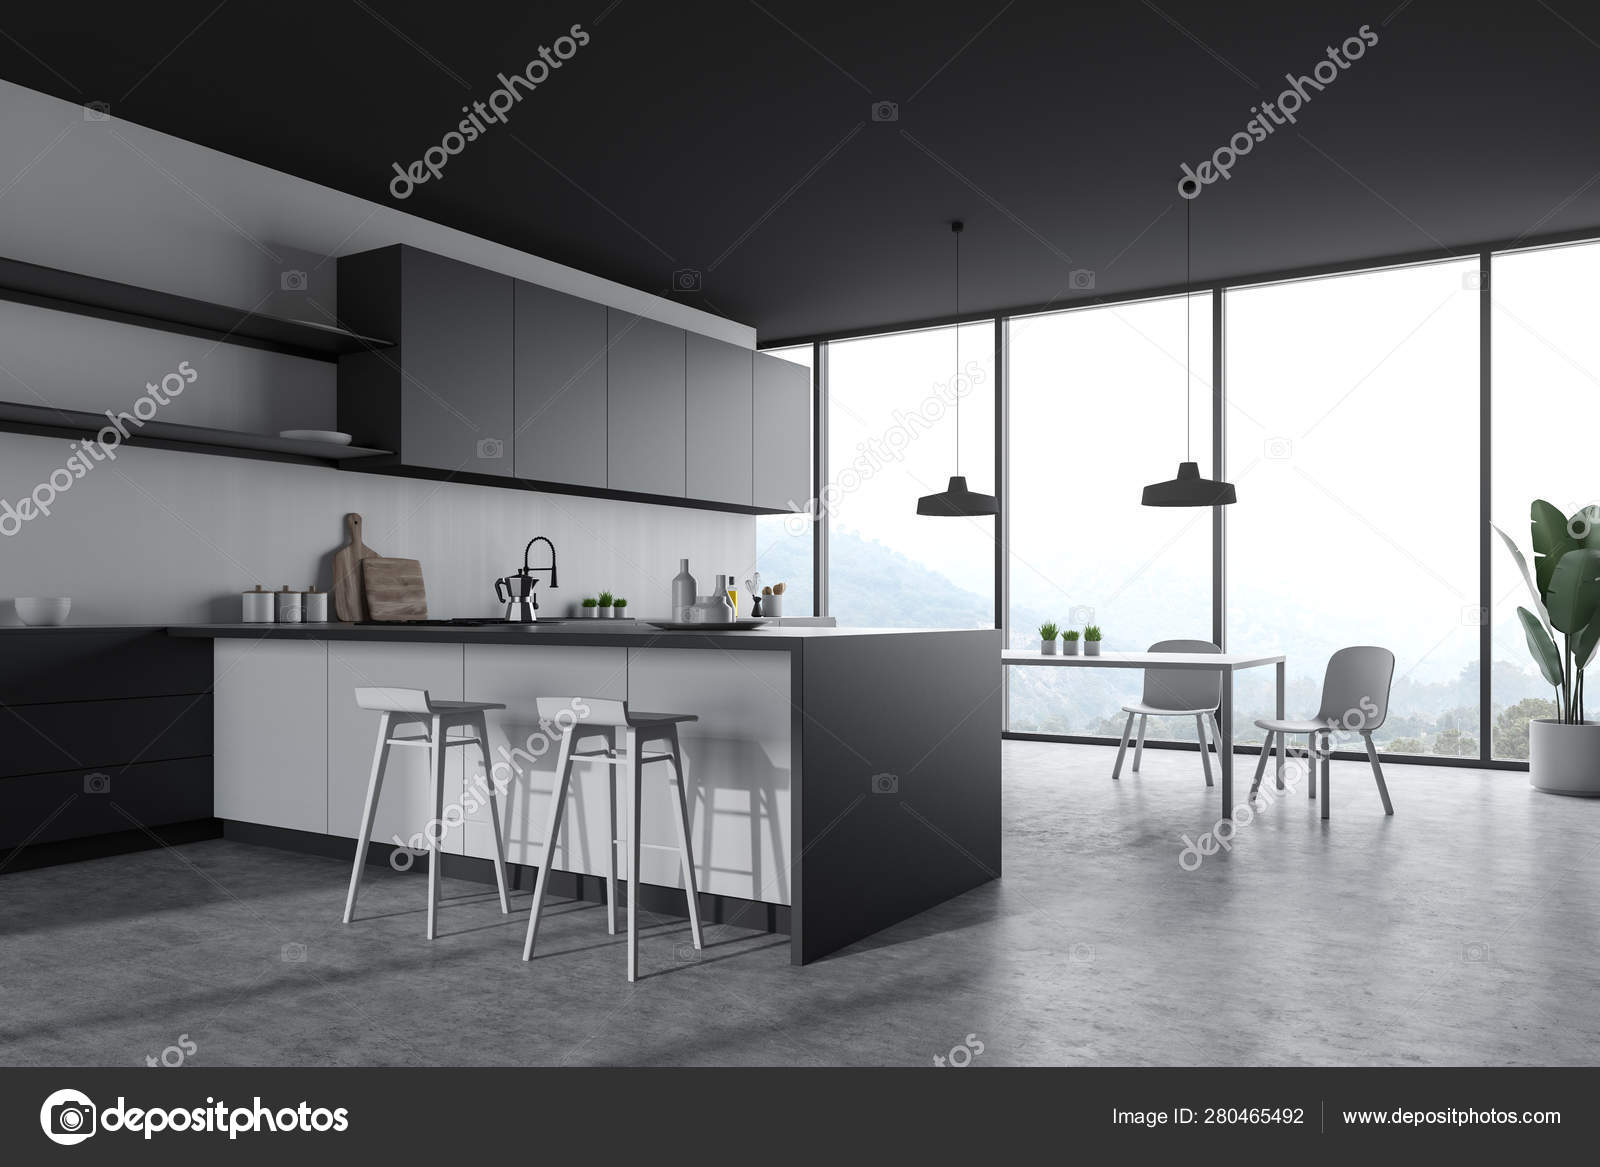 depositphotos_280465492-stock-photo-gray-and-white-kitchen-corner